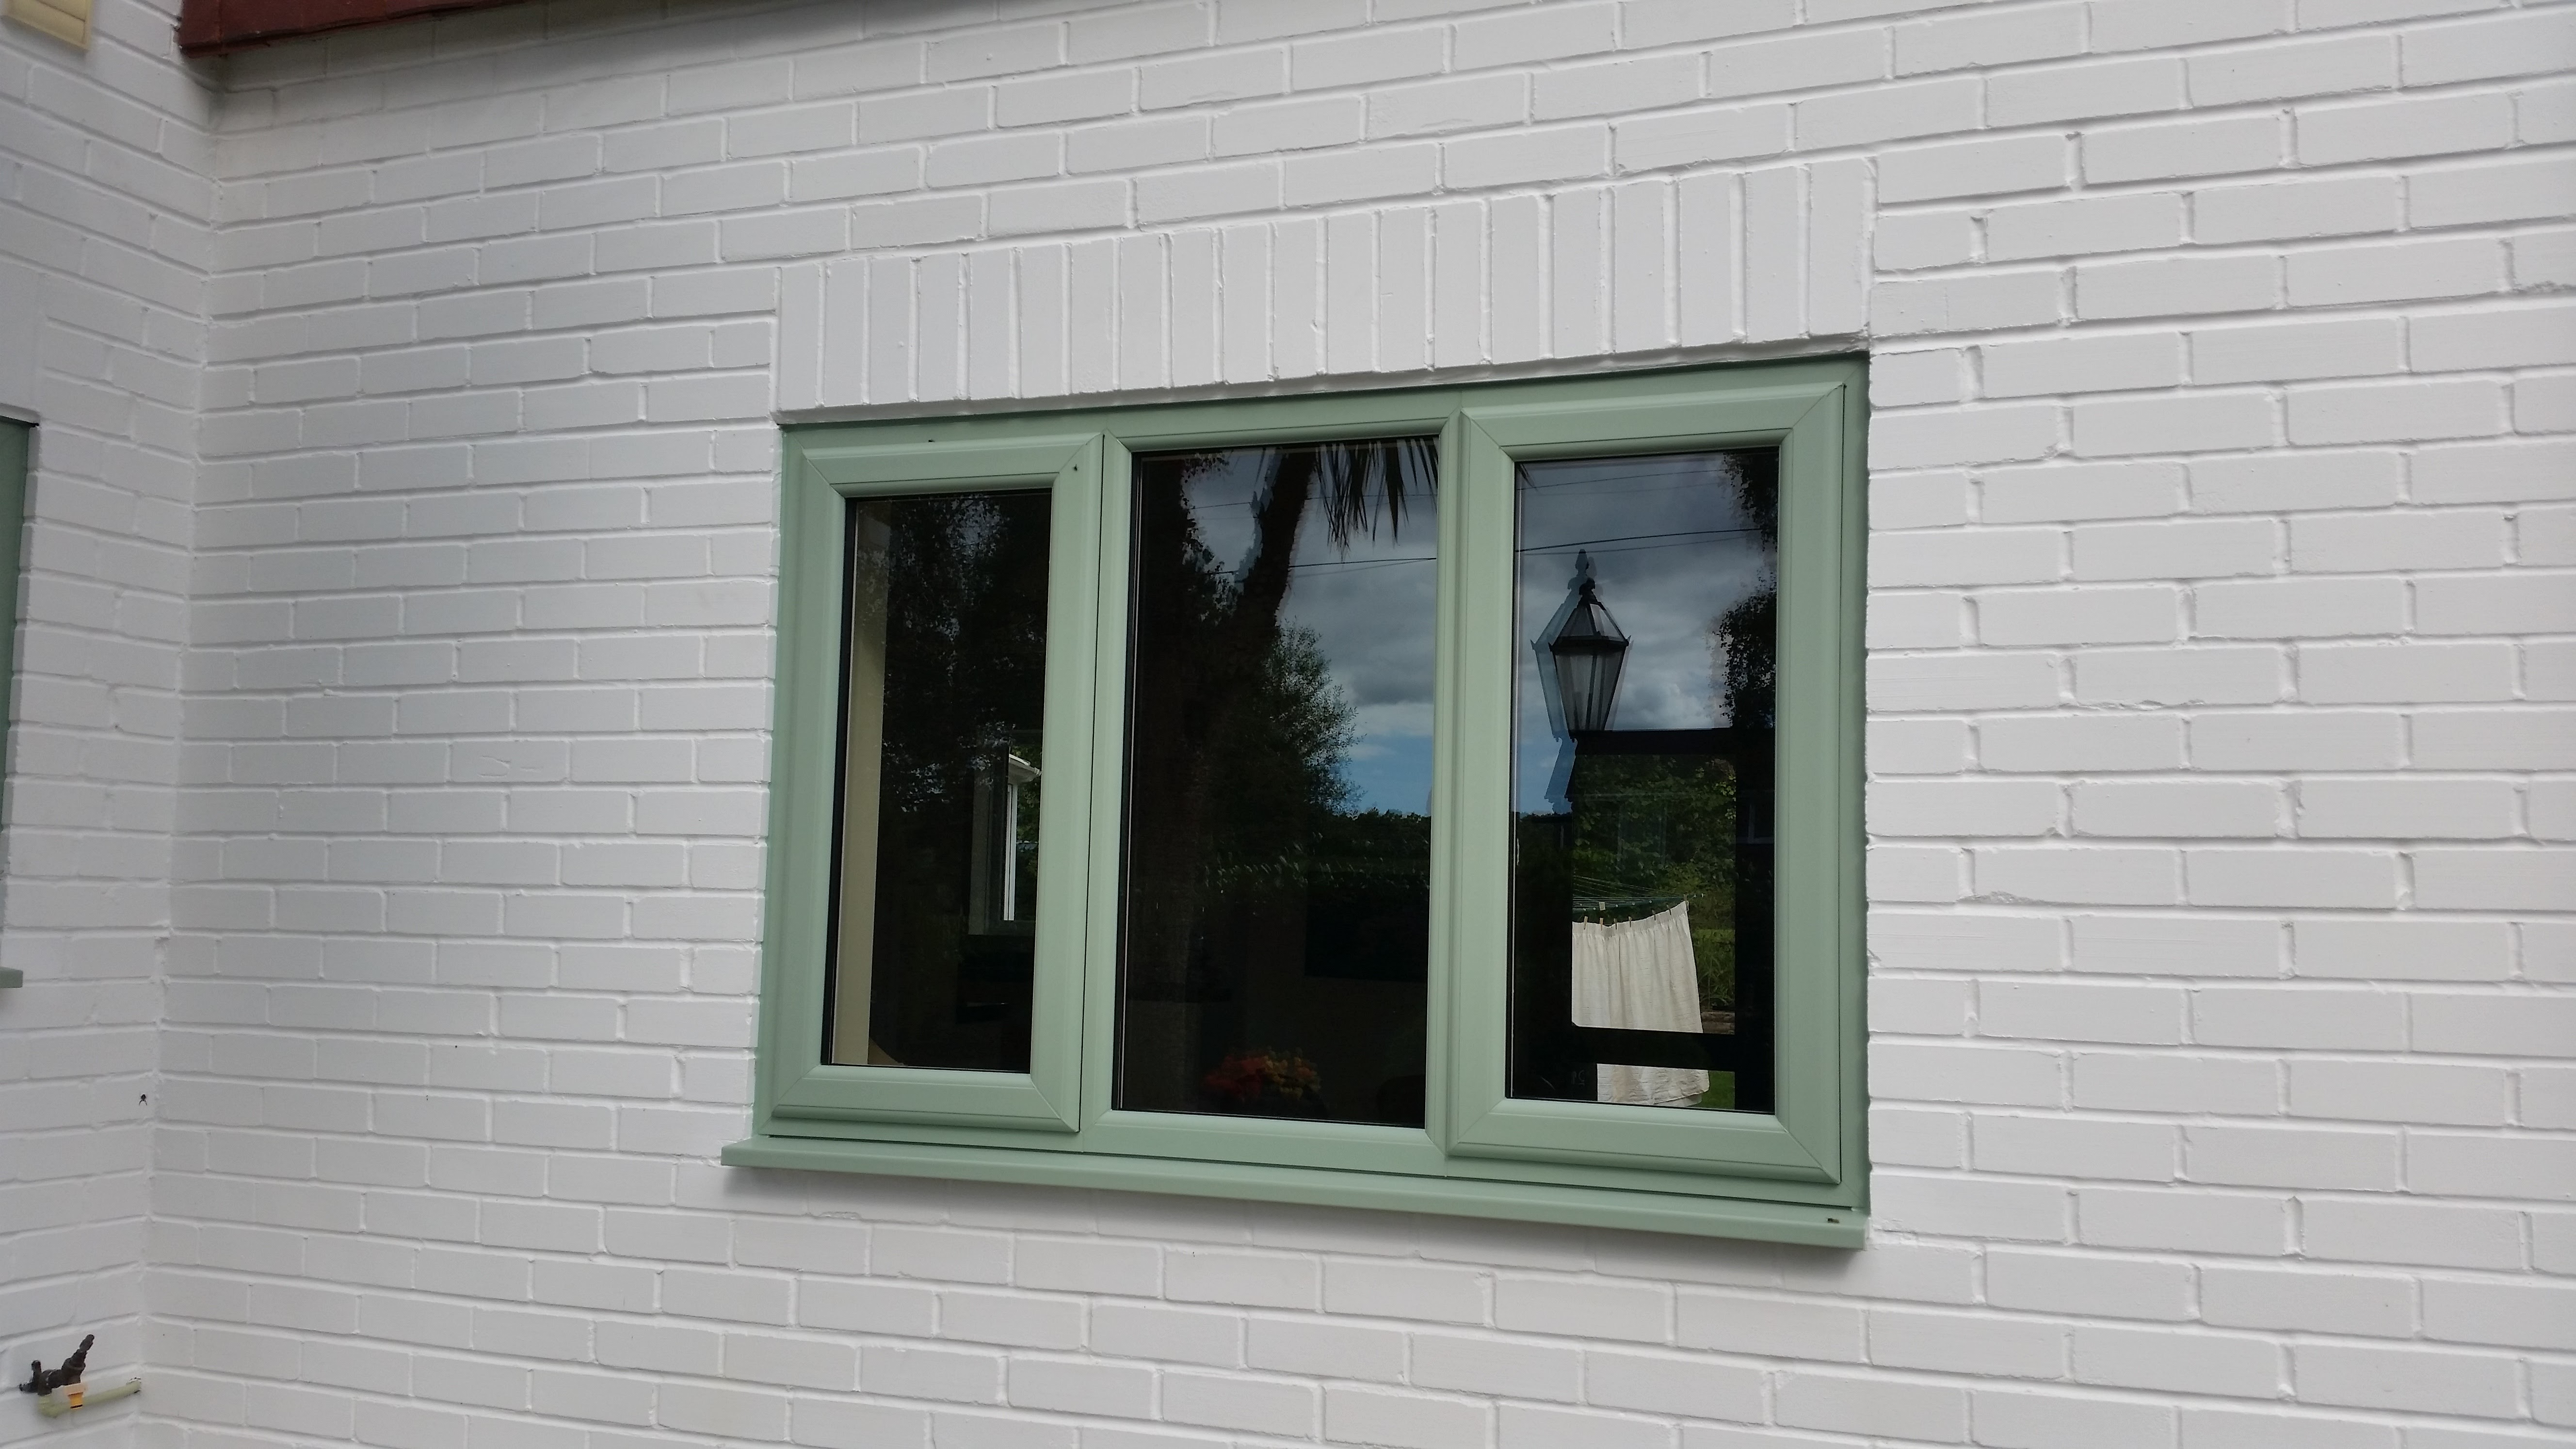 Pastel green new PVC window